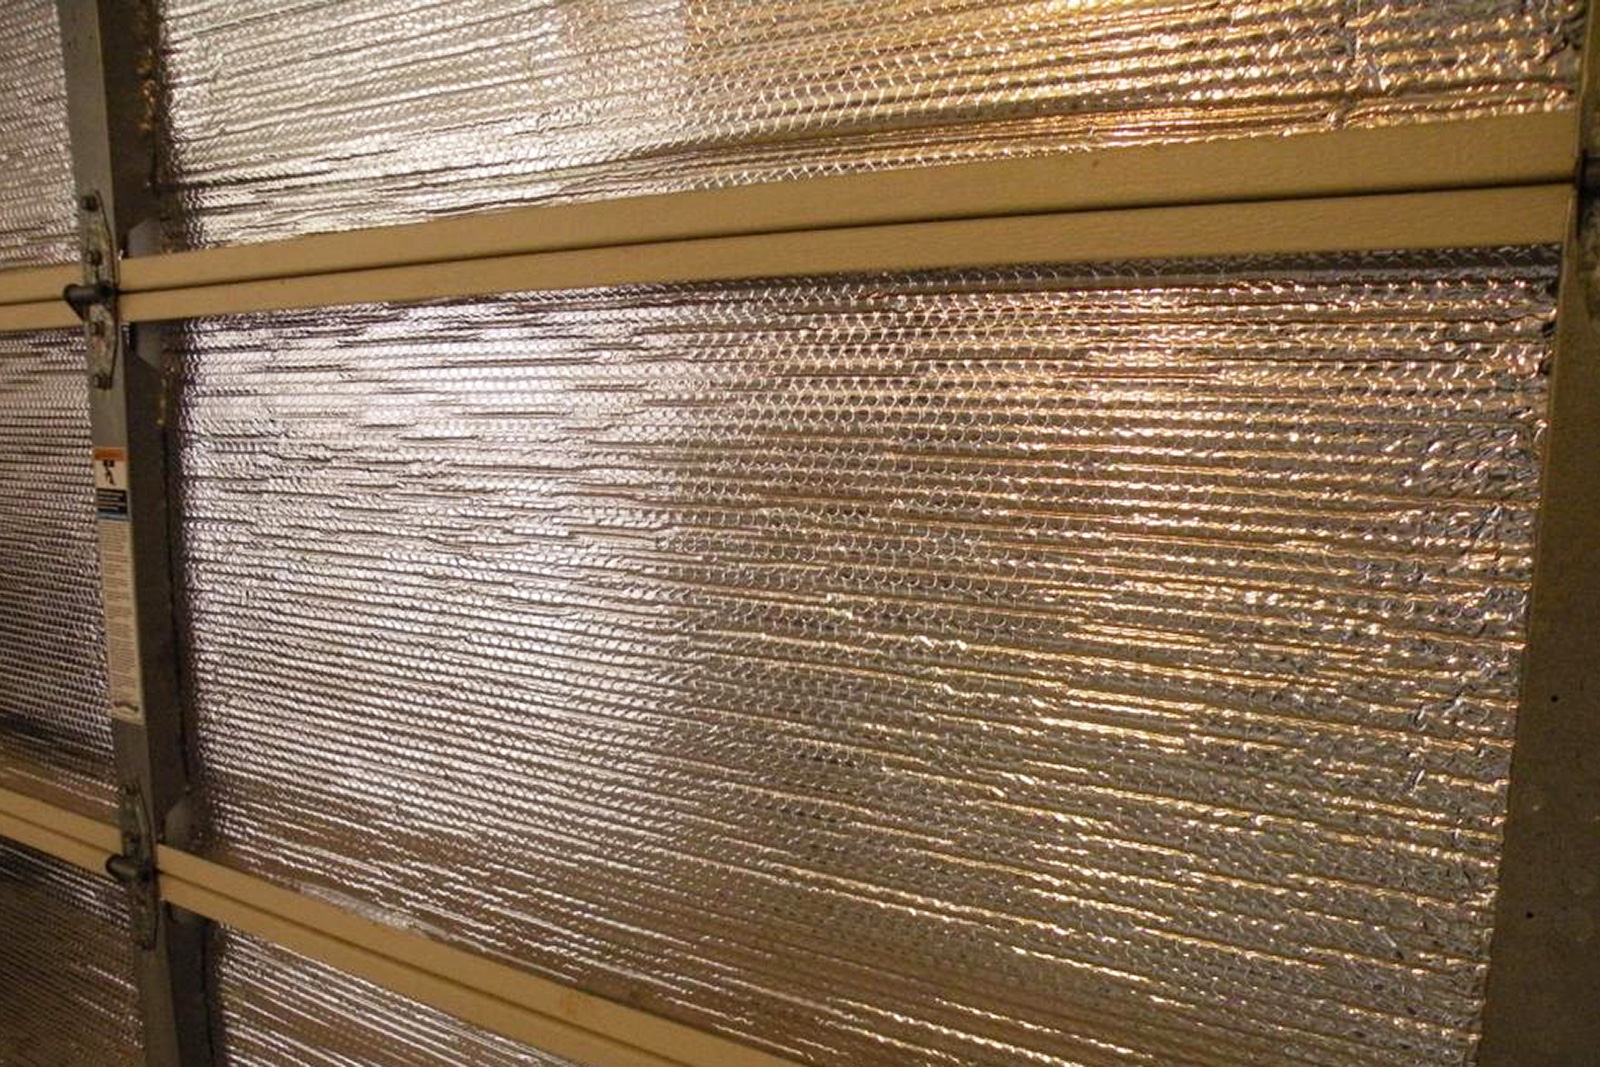 insulation garage door doors insulate blanket insulating repair heat kit insulated diy barrier standard residential closet value material reflective carport